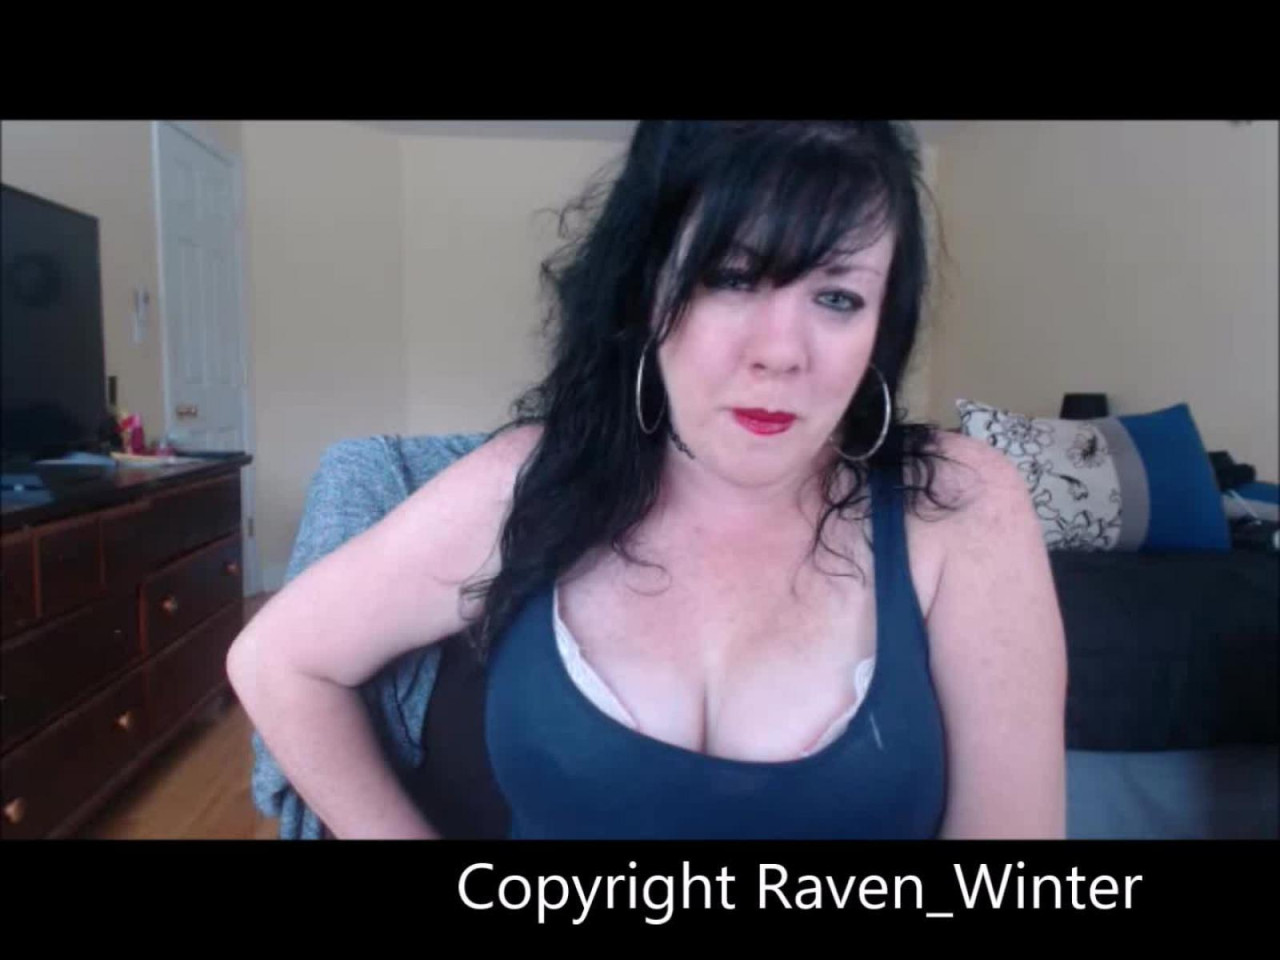 raven_winter video download release [2021/12/19]